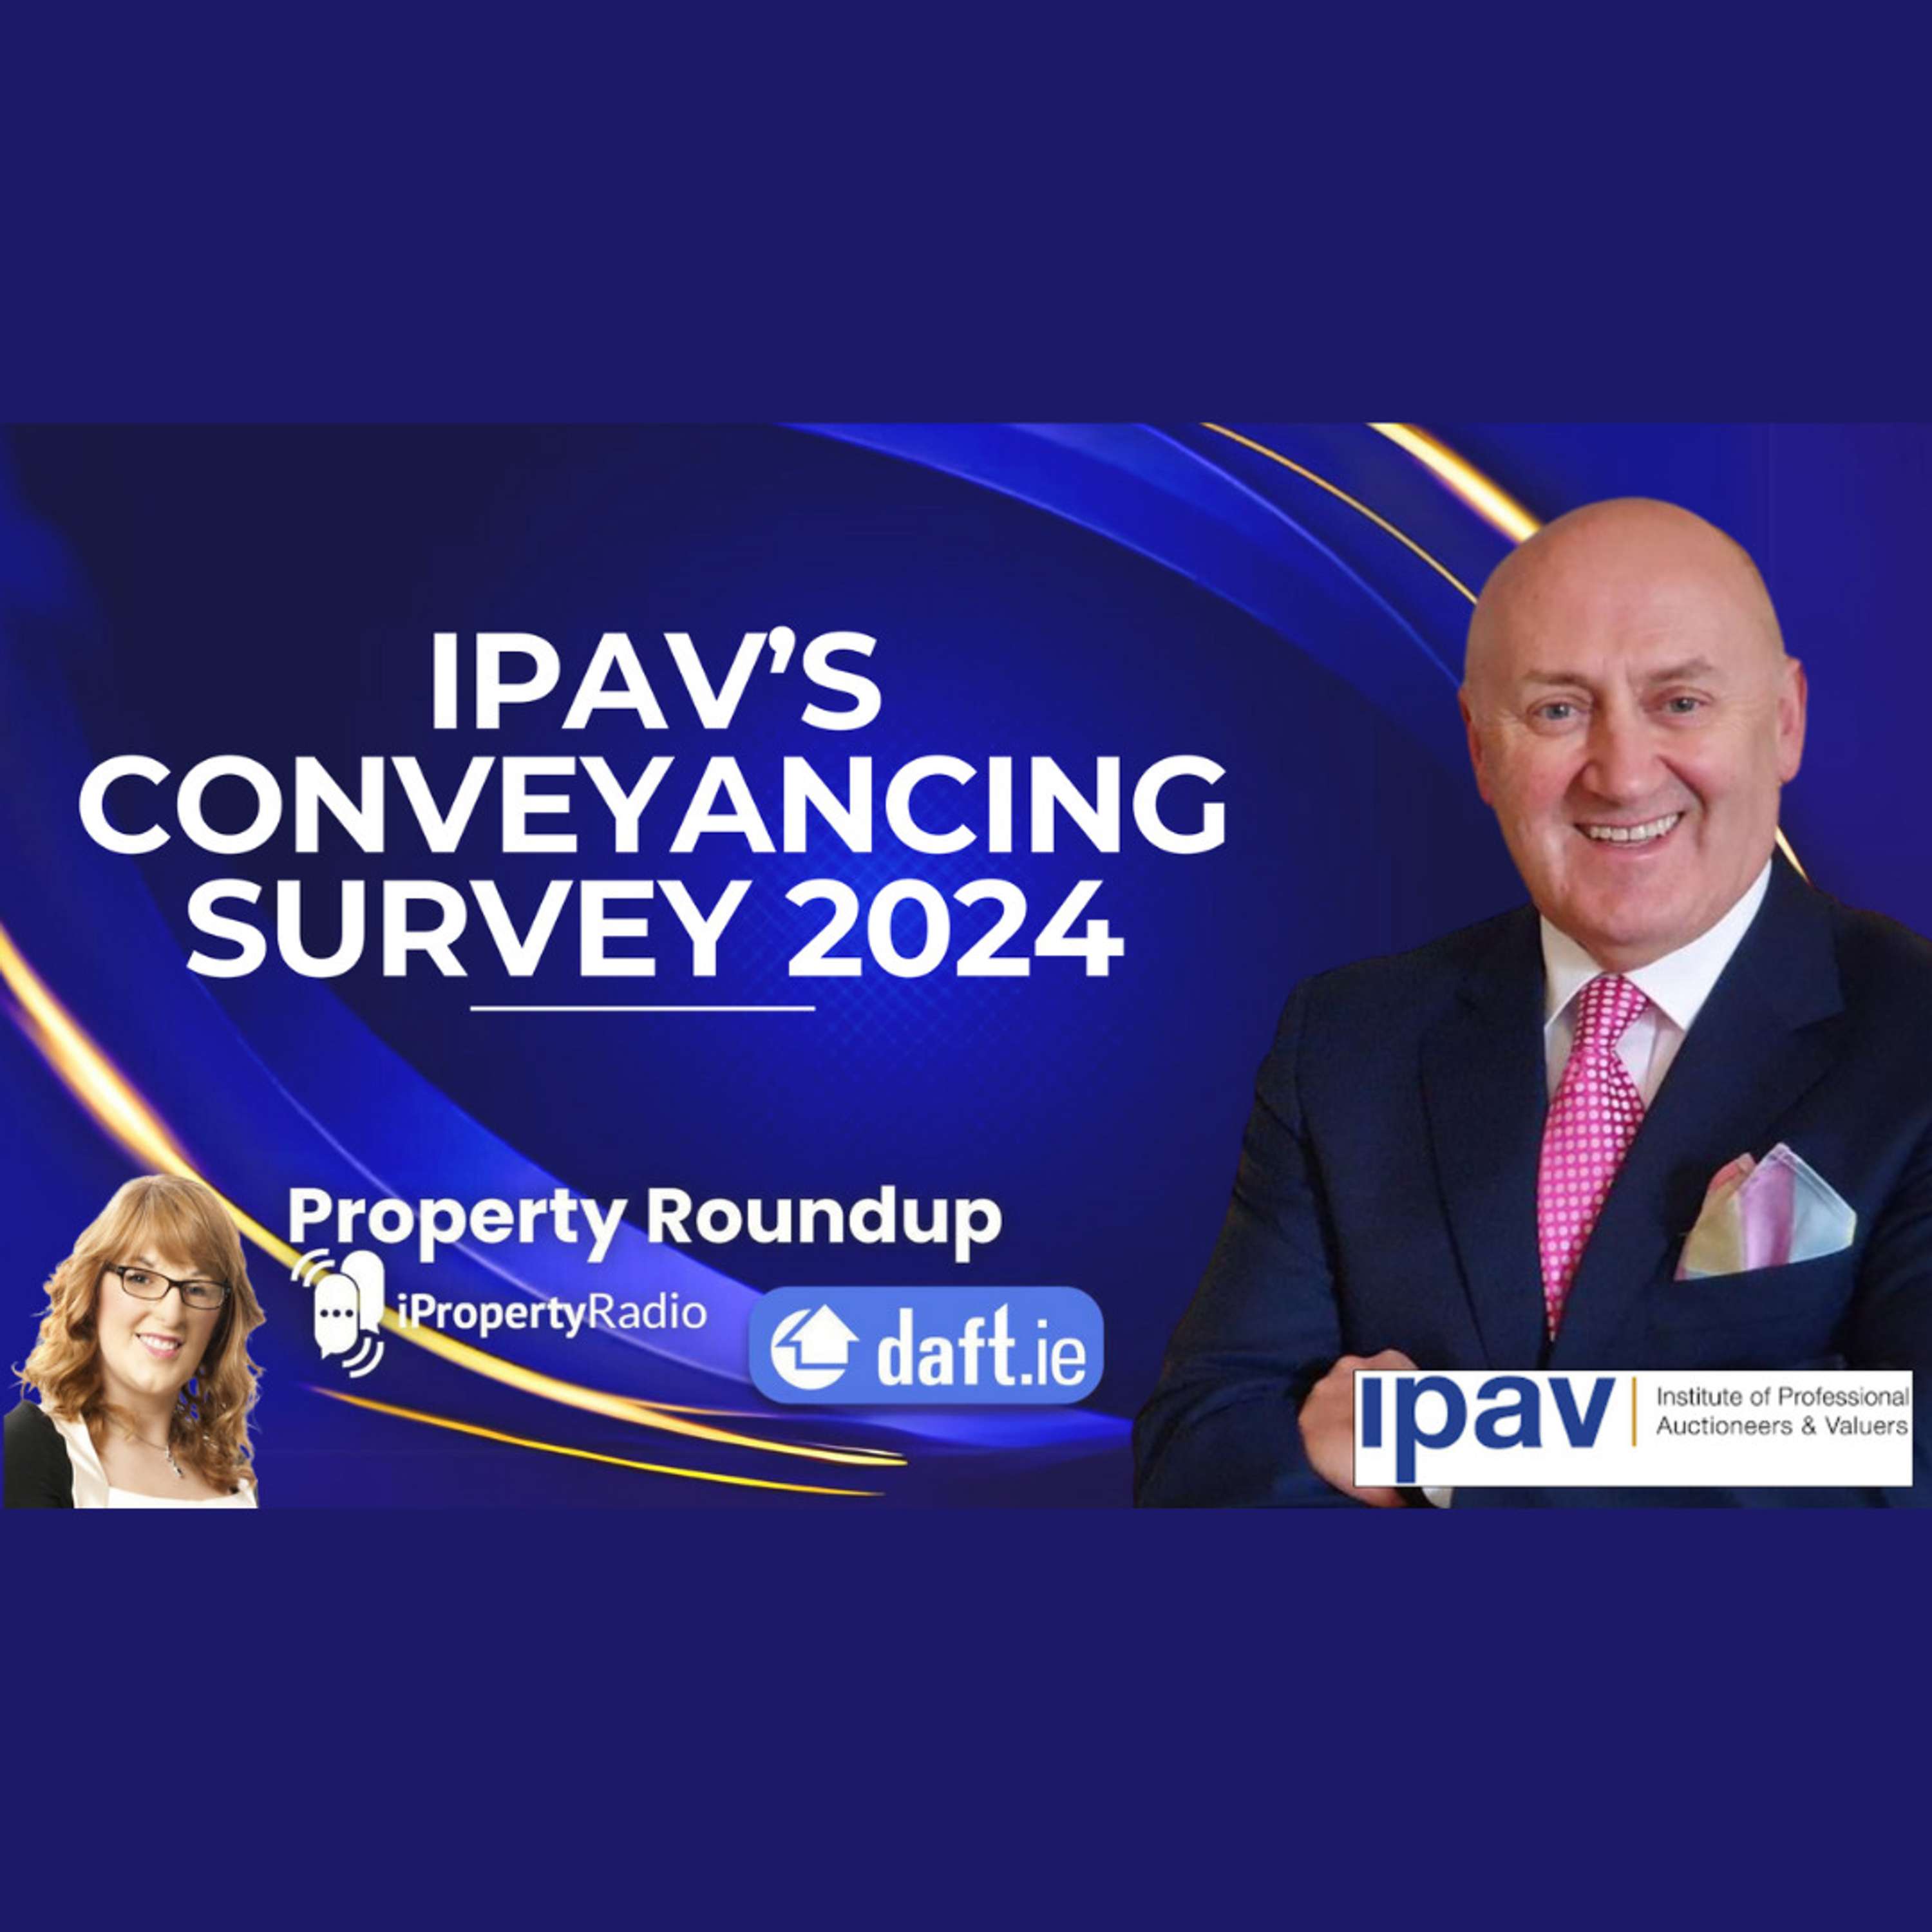 IPAV’s Conveyancing Survey 2024